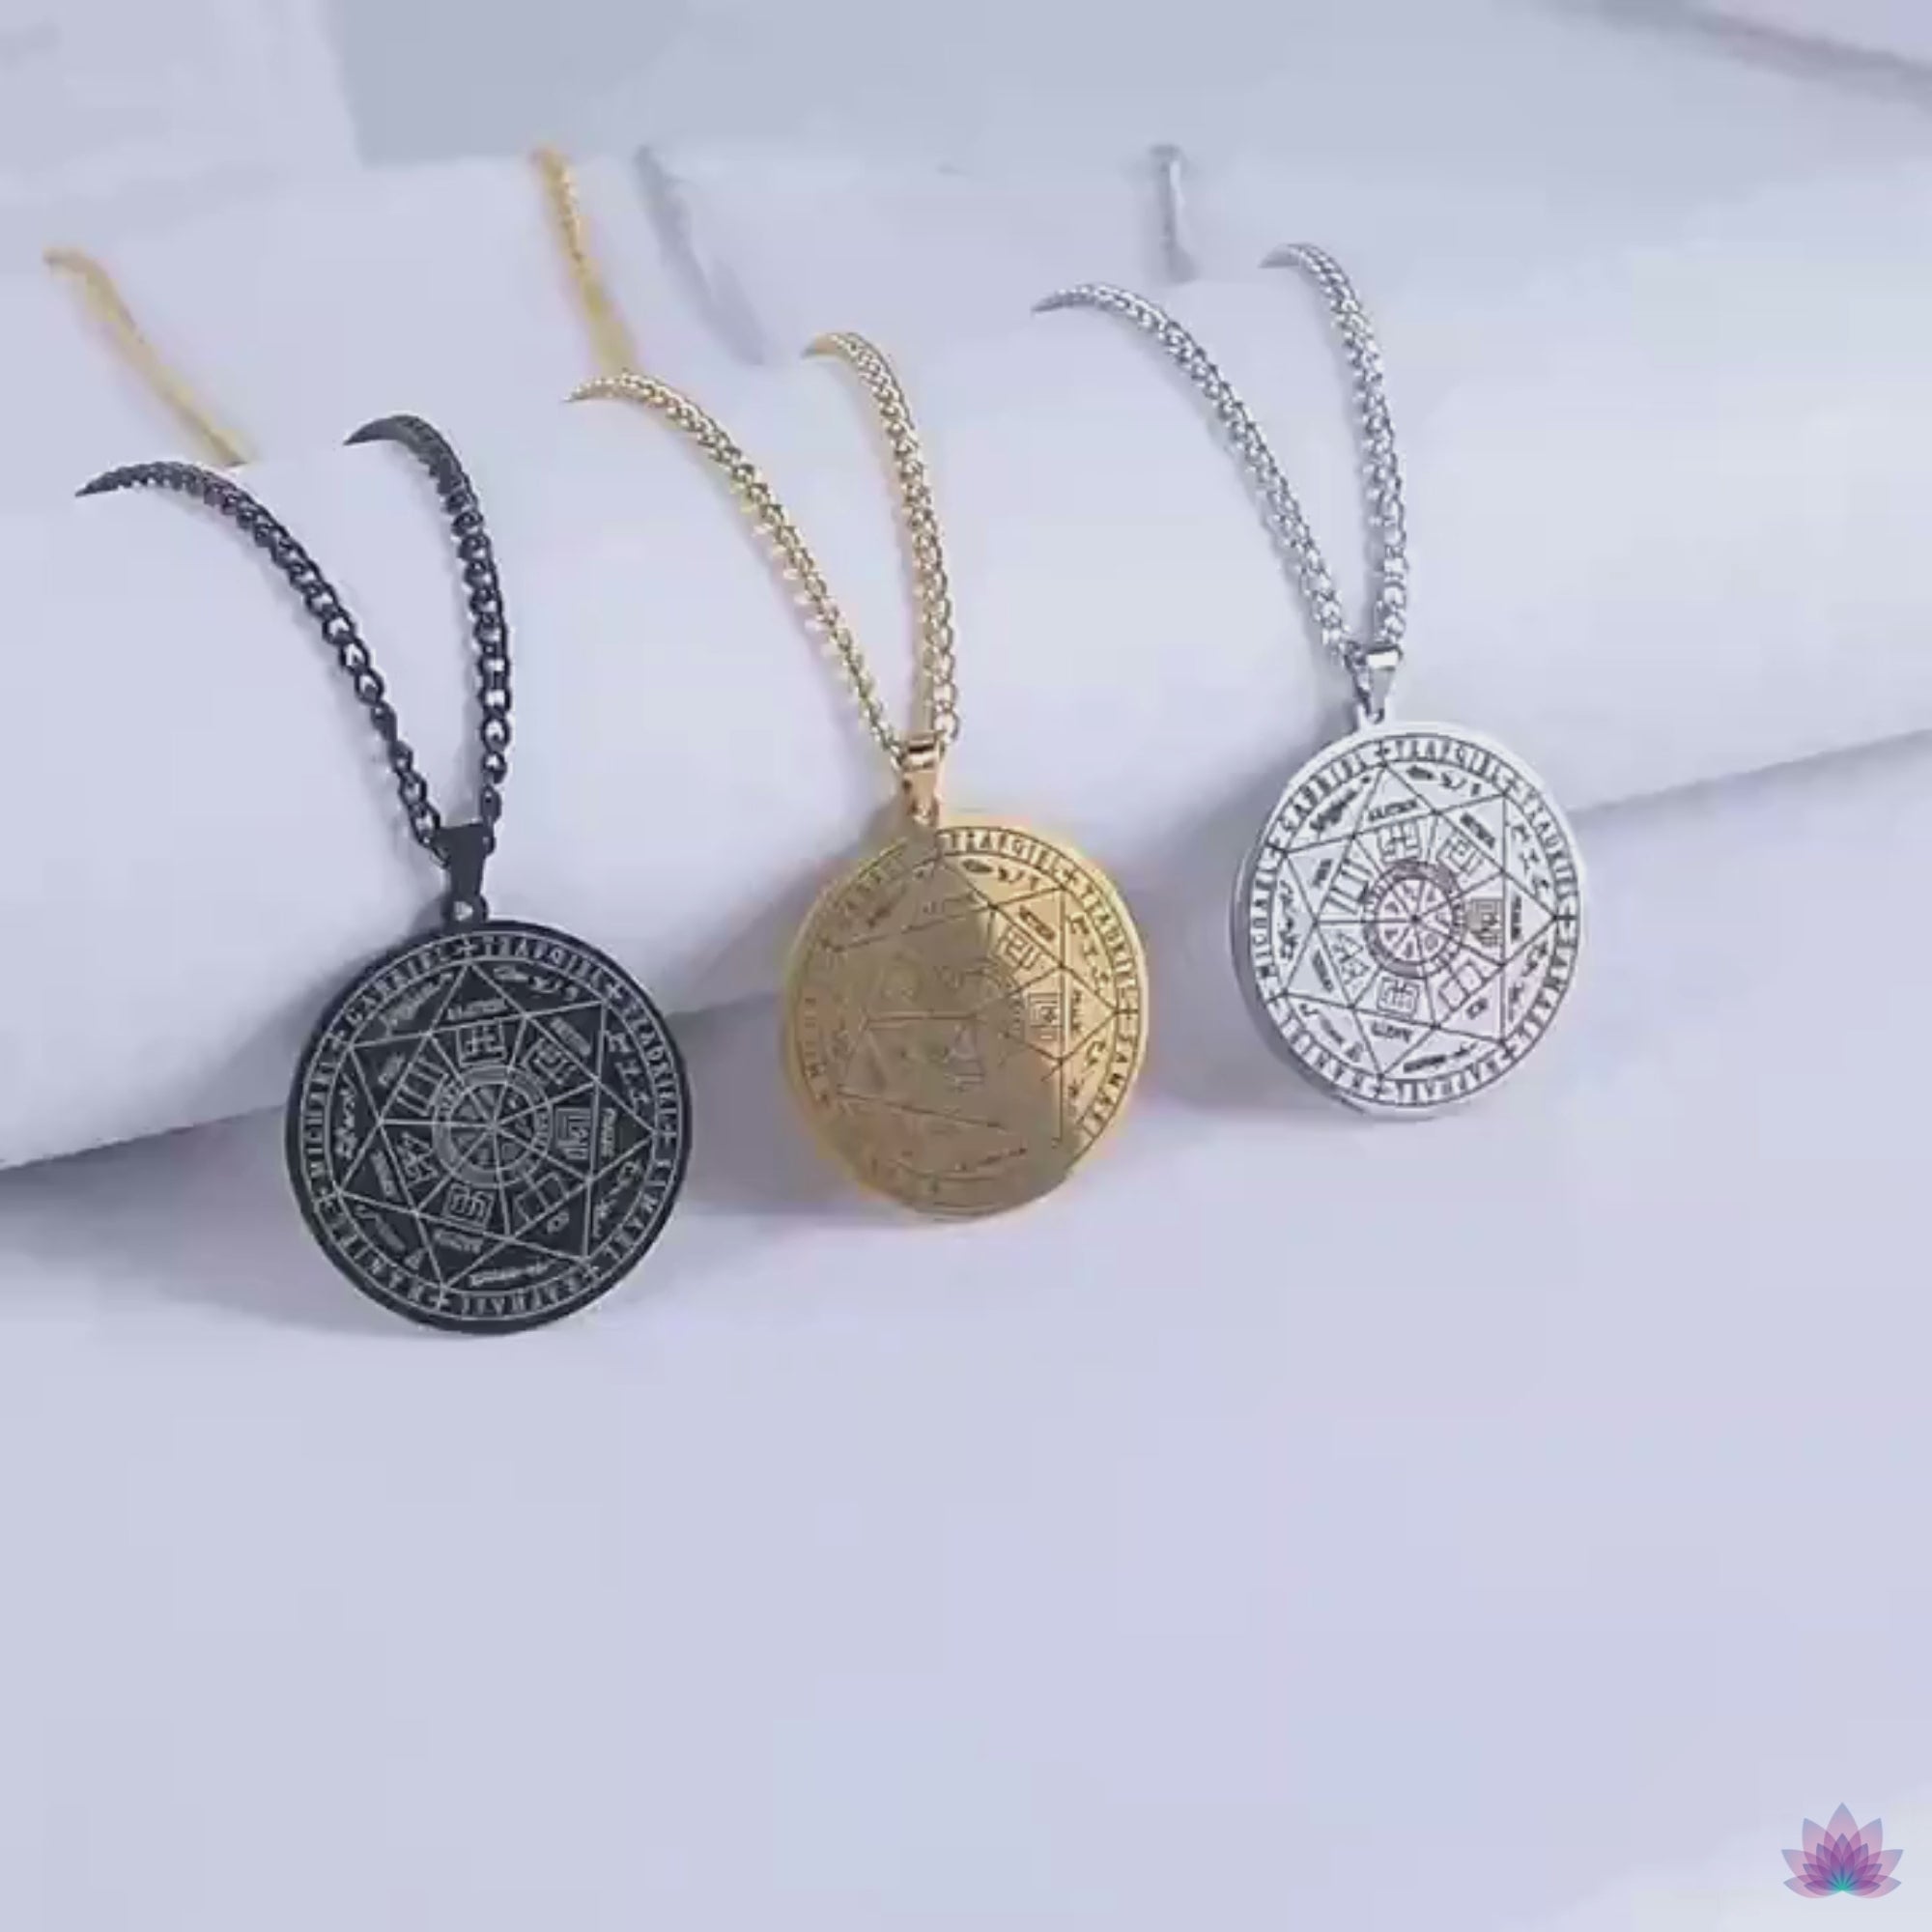 7 Archangels Sigil Charm Necklace • Seal of Solomon Pendant • Kabbalah Astrology Protection Amulet • Magick Talisman Jewelry